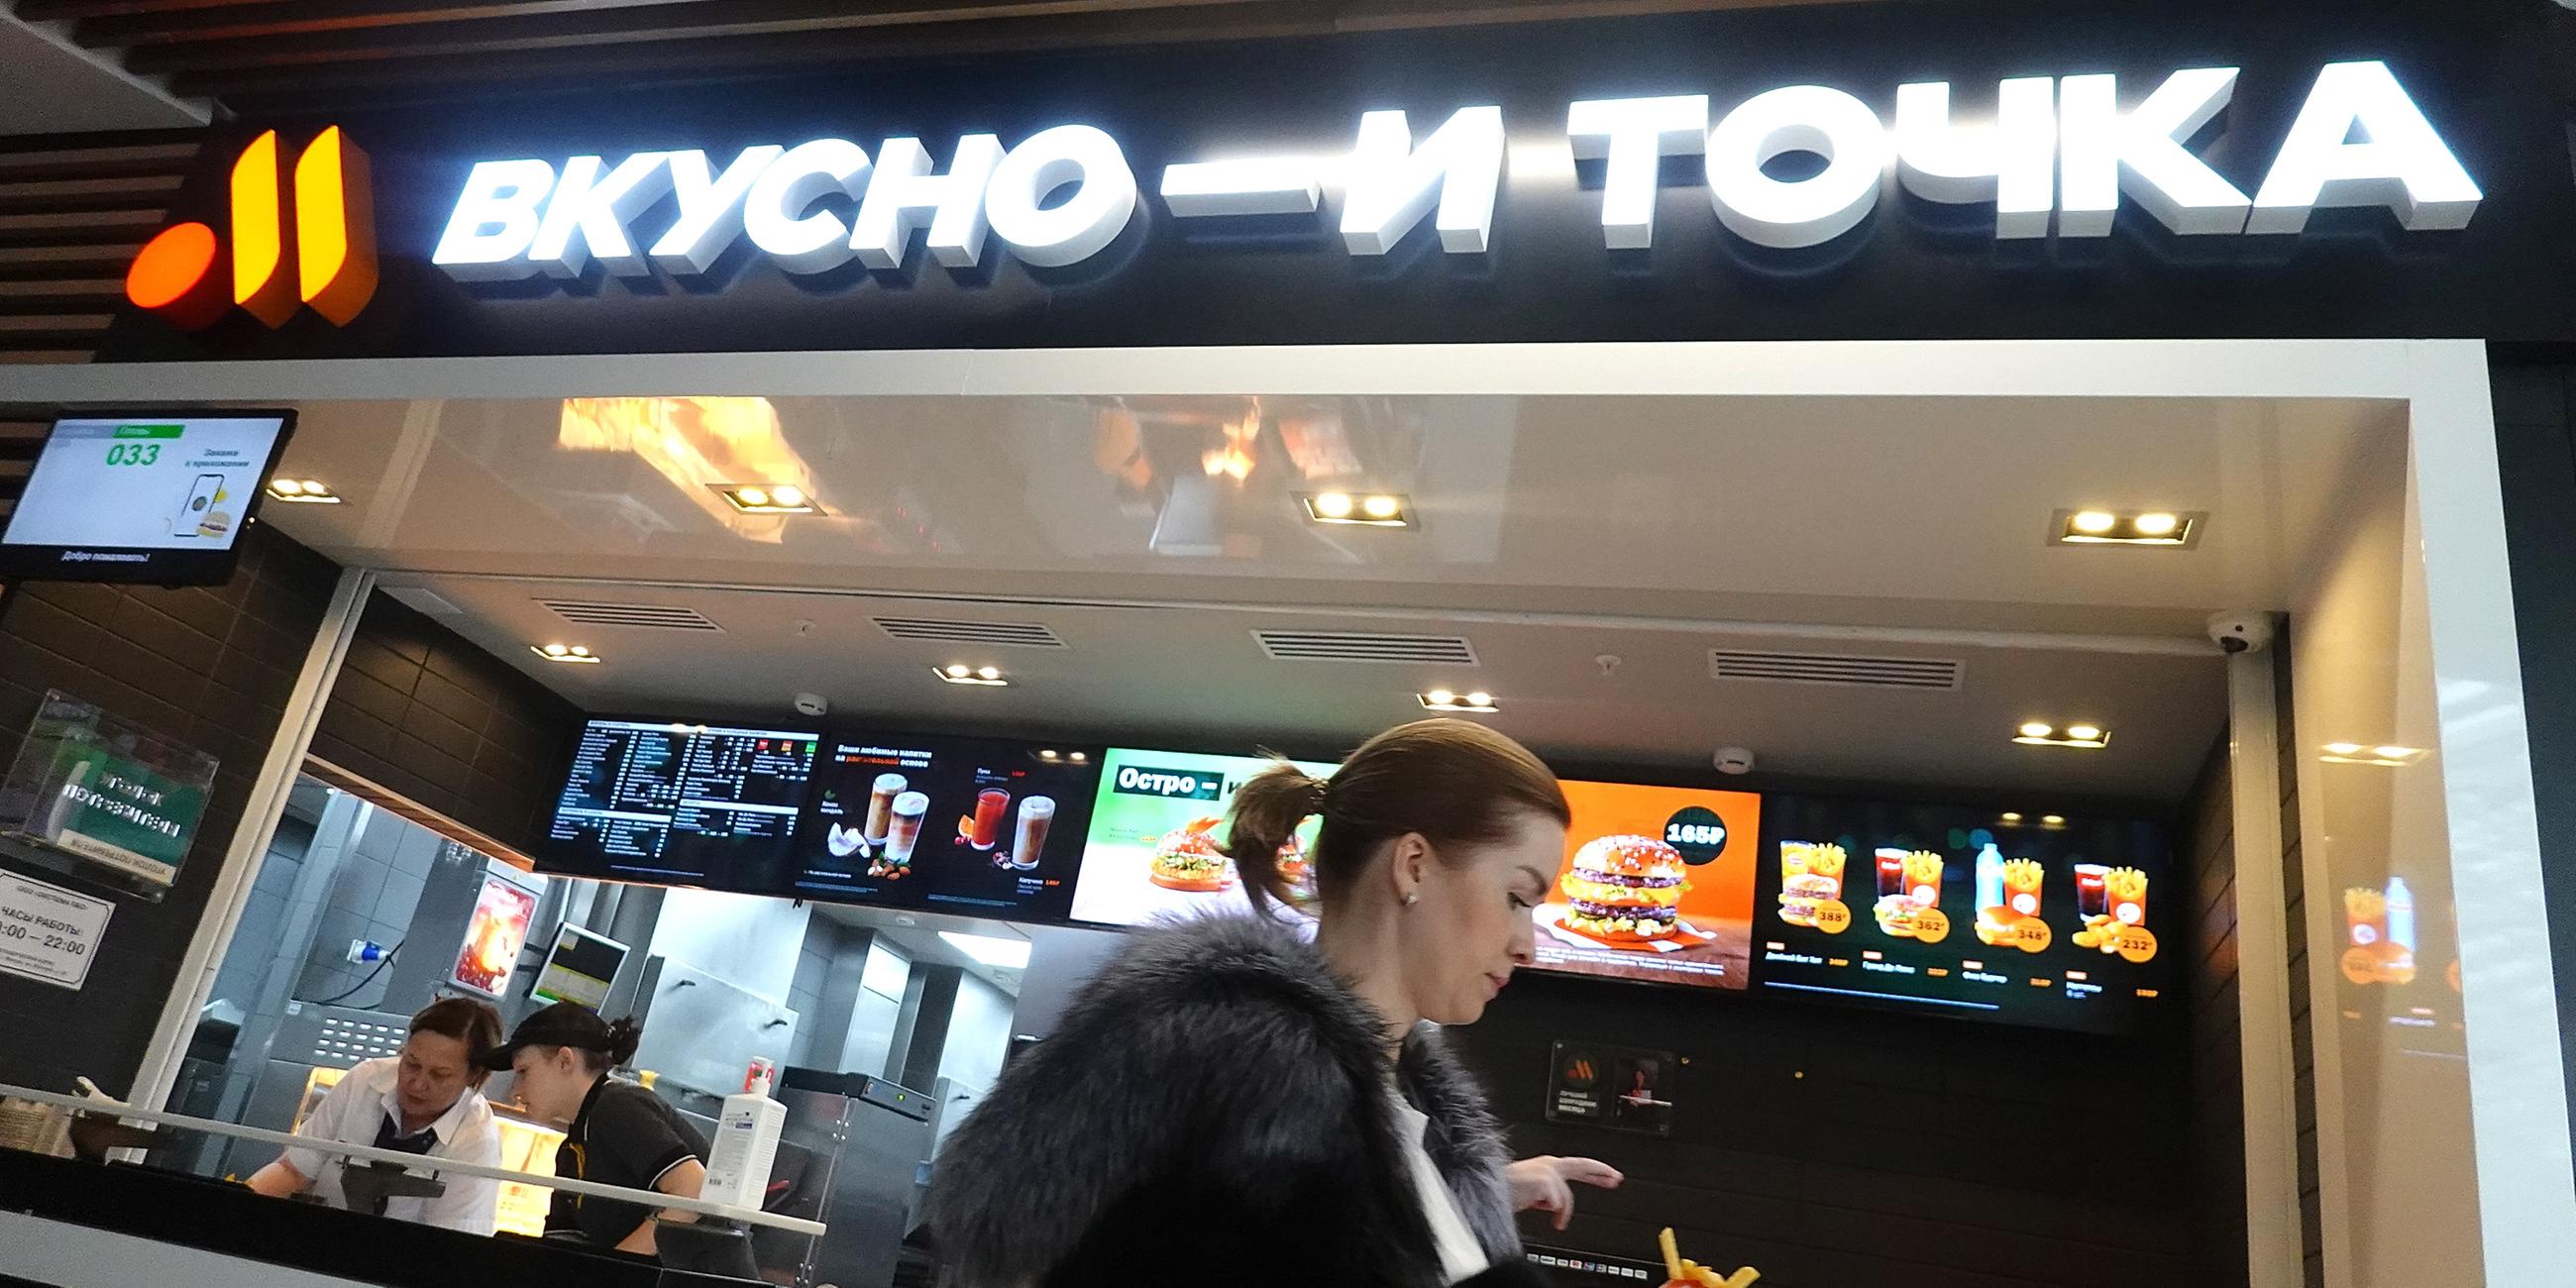 Verkaufstresen des McDonald's-Nachfolgers Wkusno i totschka in Moskau